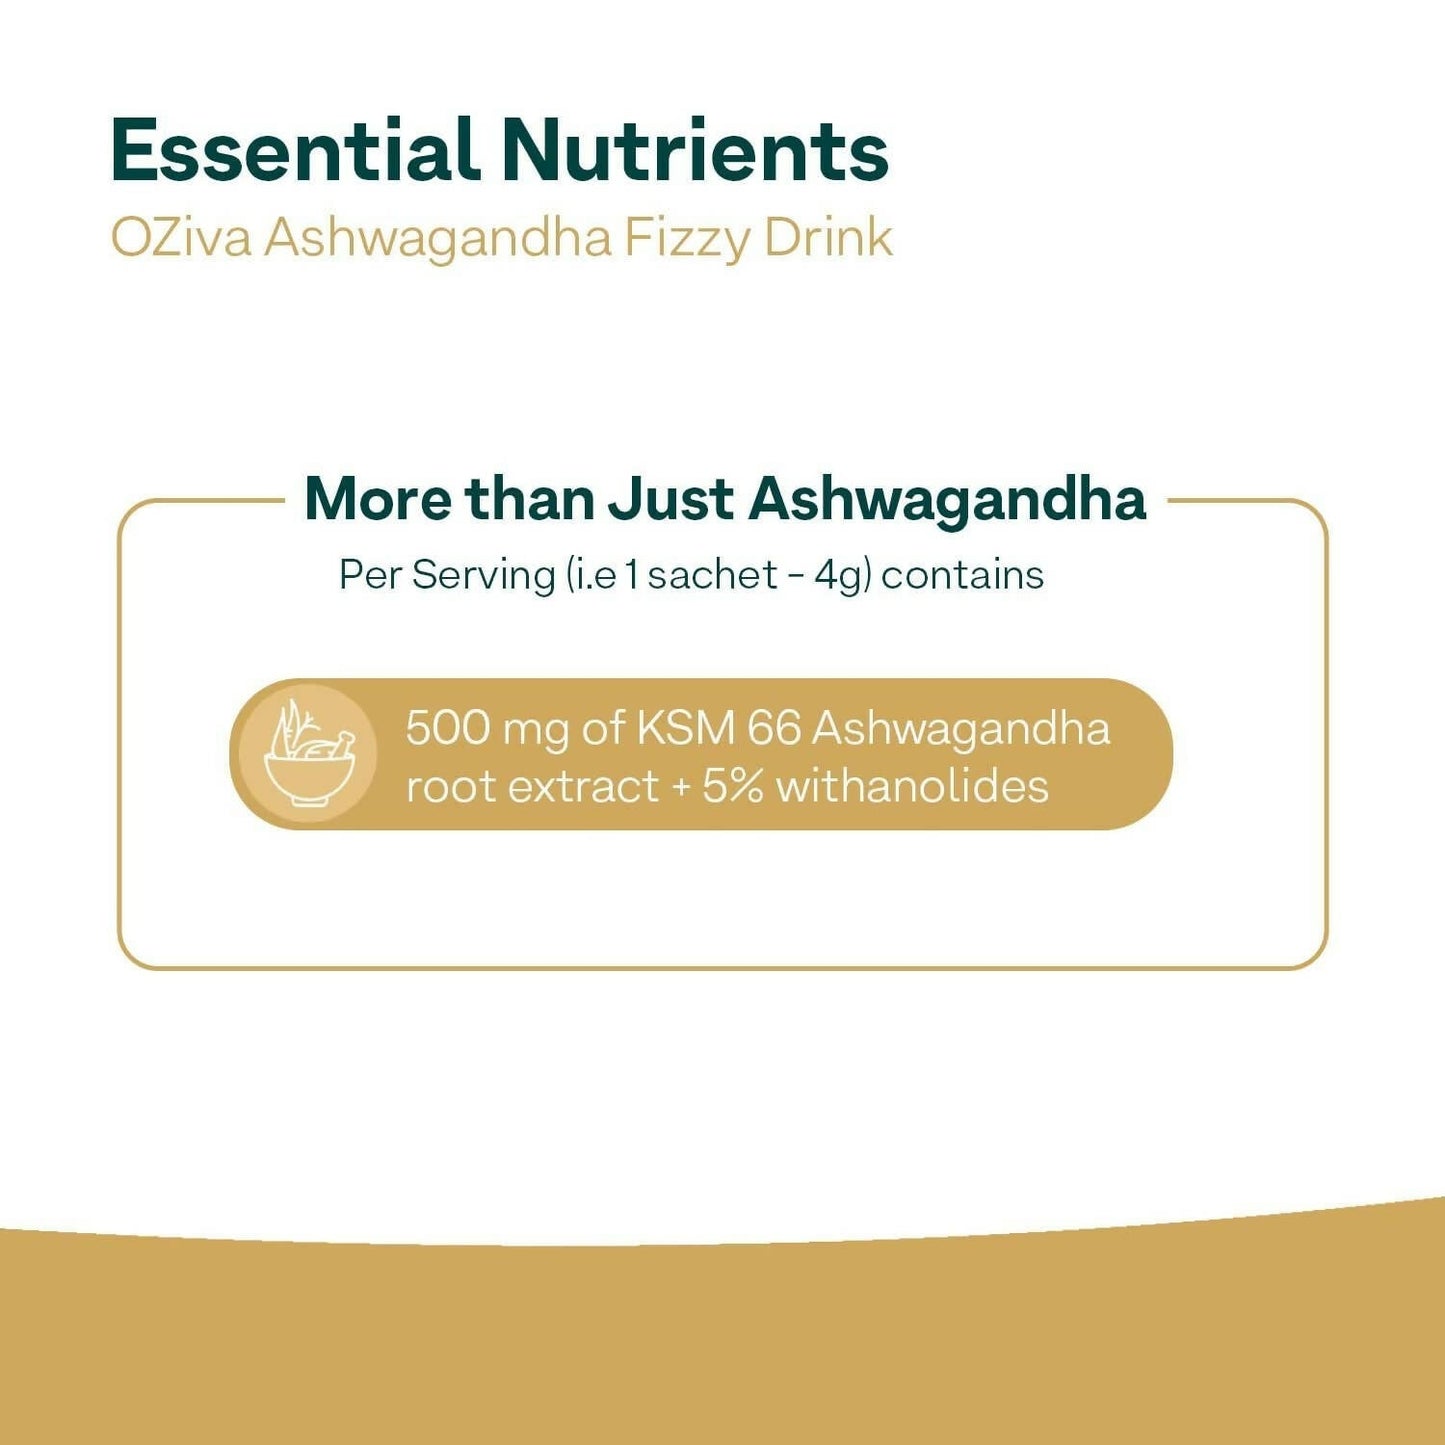 OZiva Ashwagandha Fizzy Drink Mix